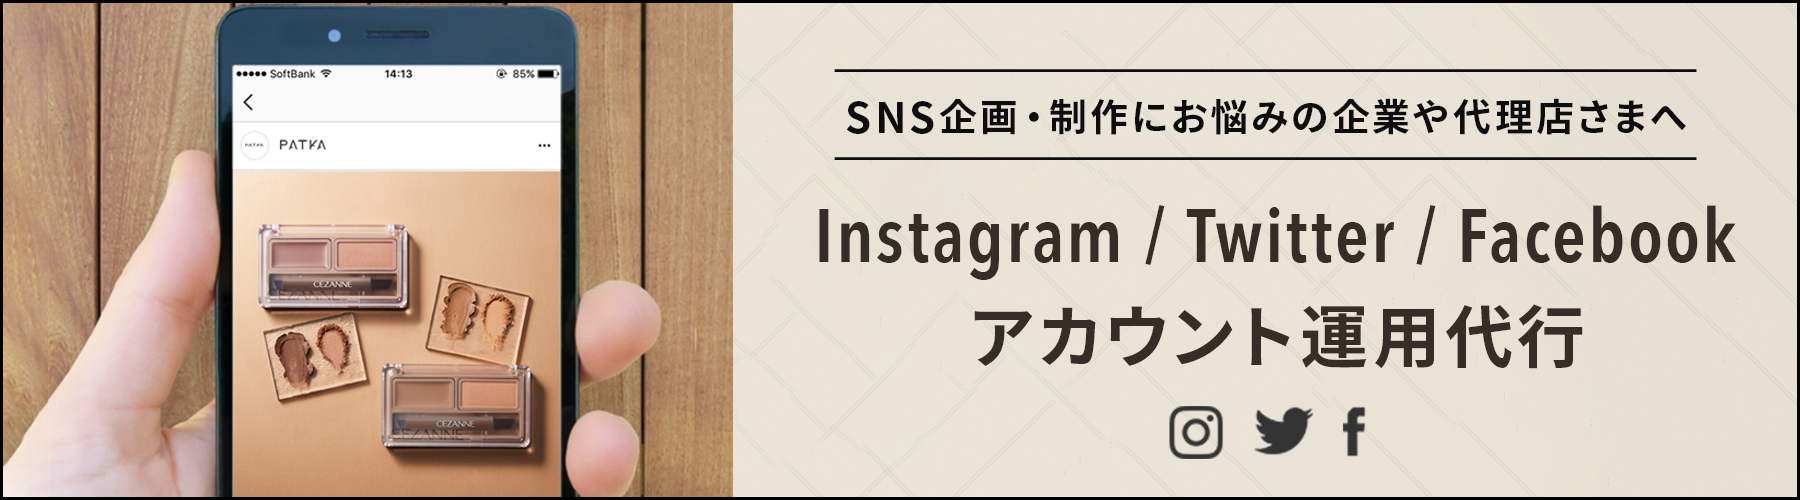 Instagram Twitter Facebook アカウント代行サービス